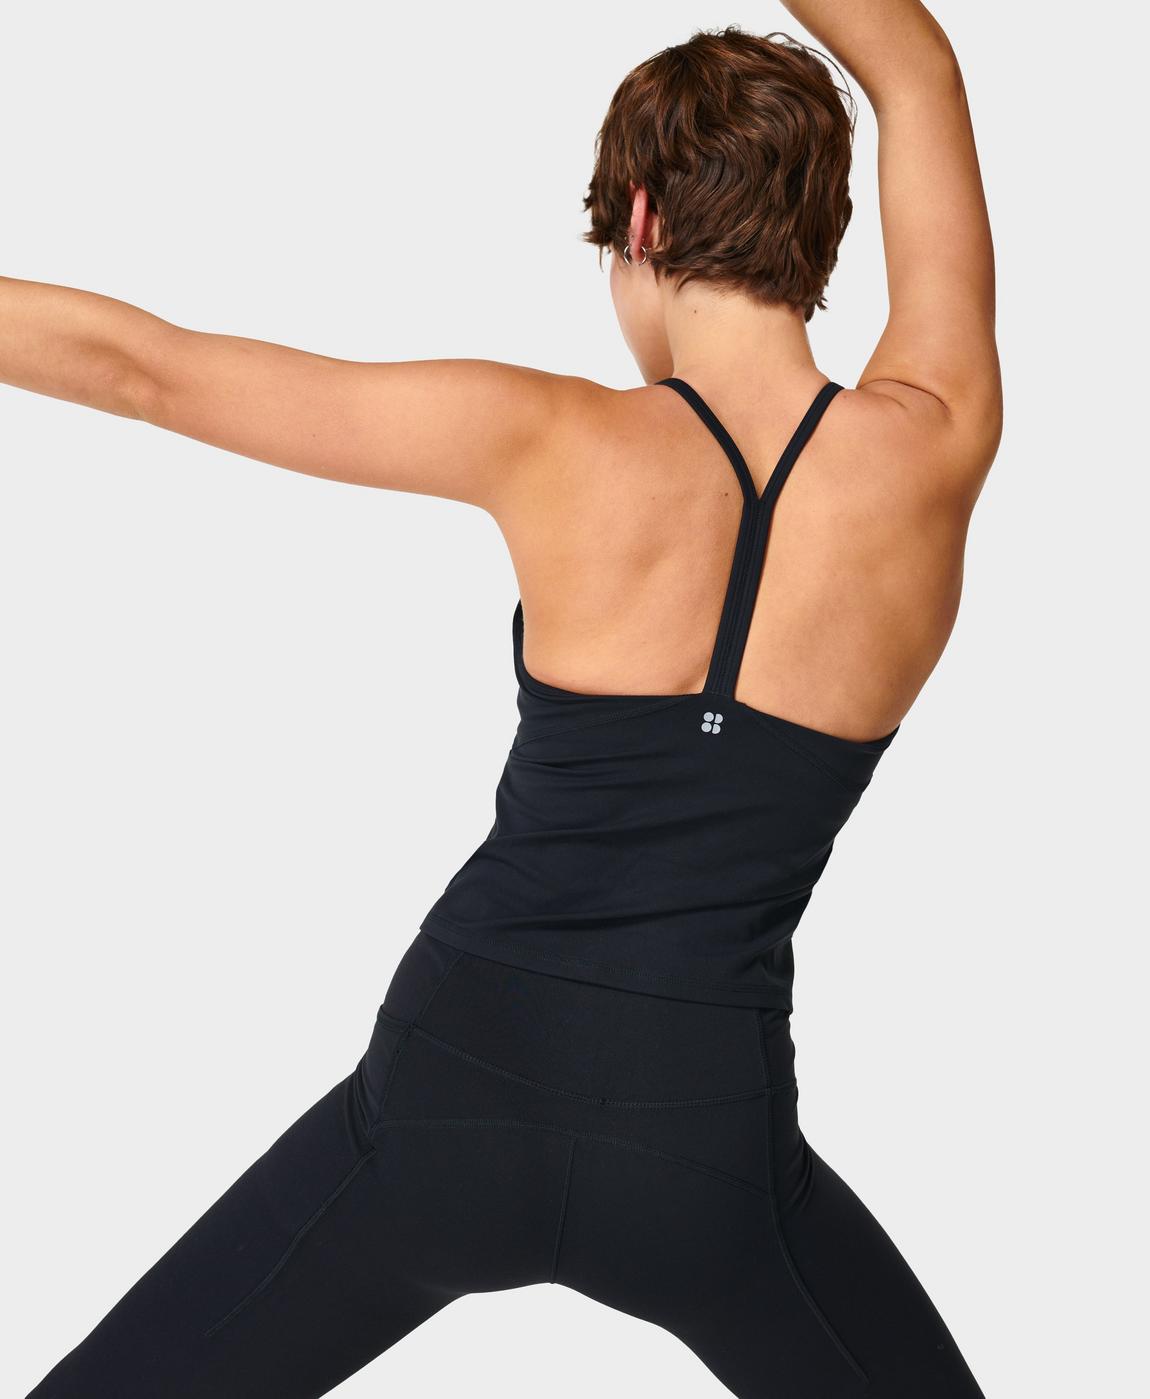 Super Soft Yoga Vest - Black, Women's Vests